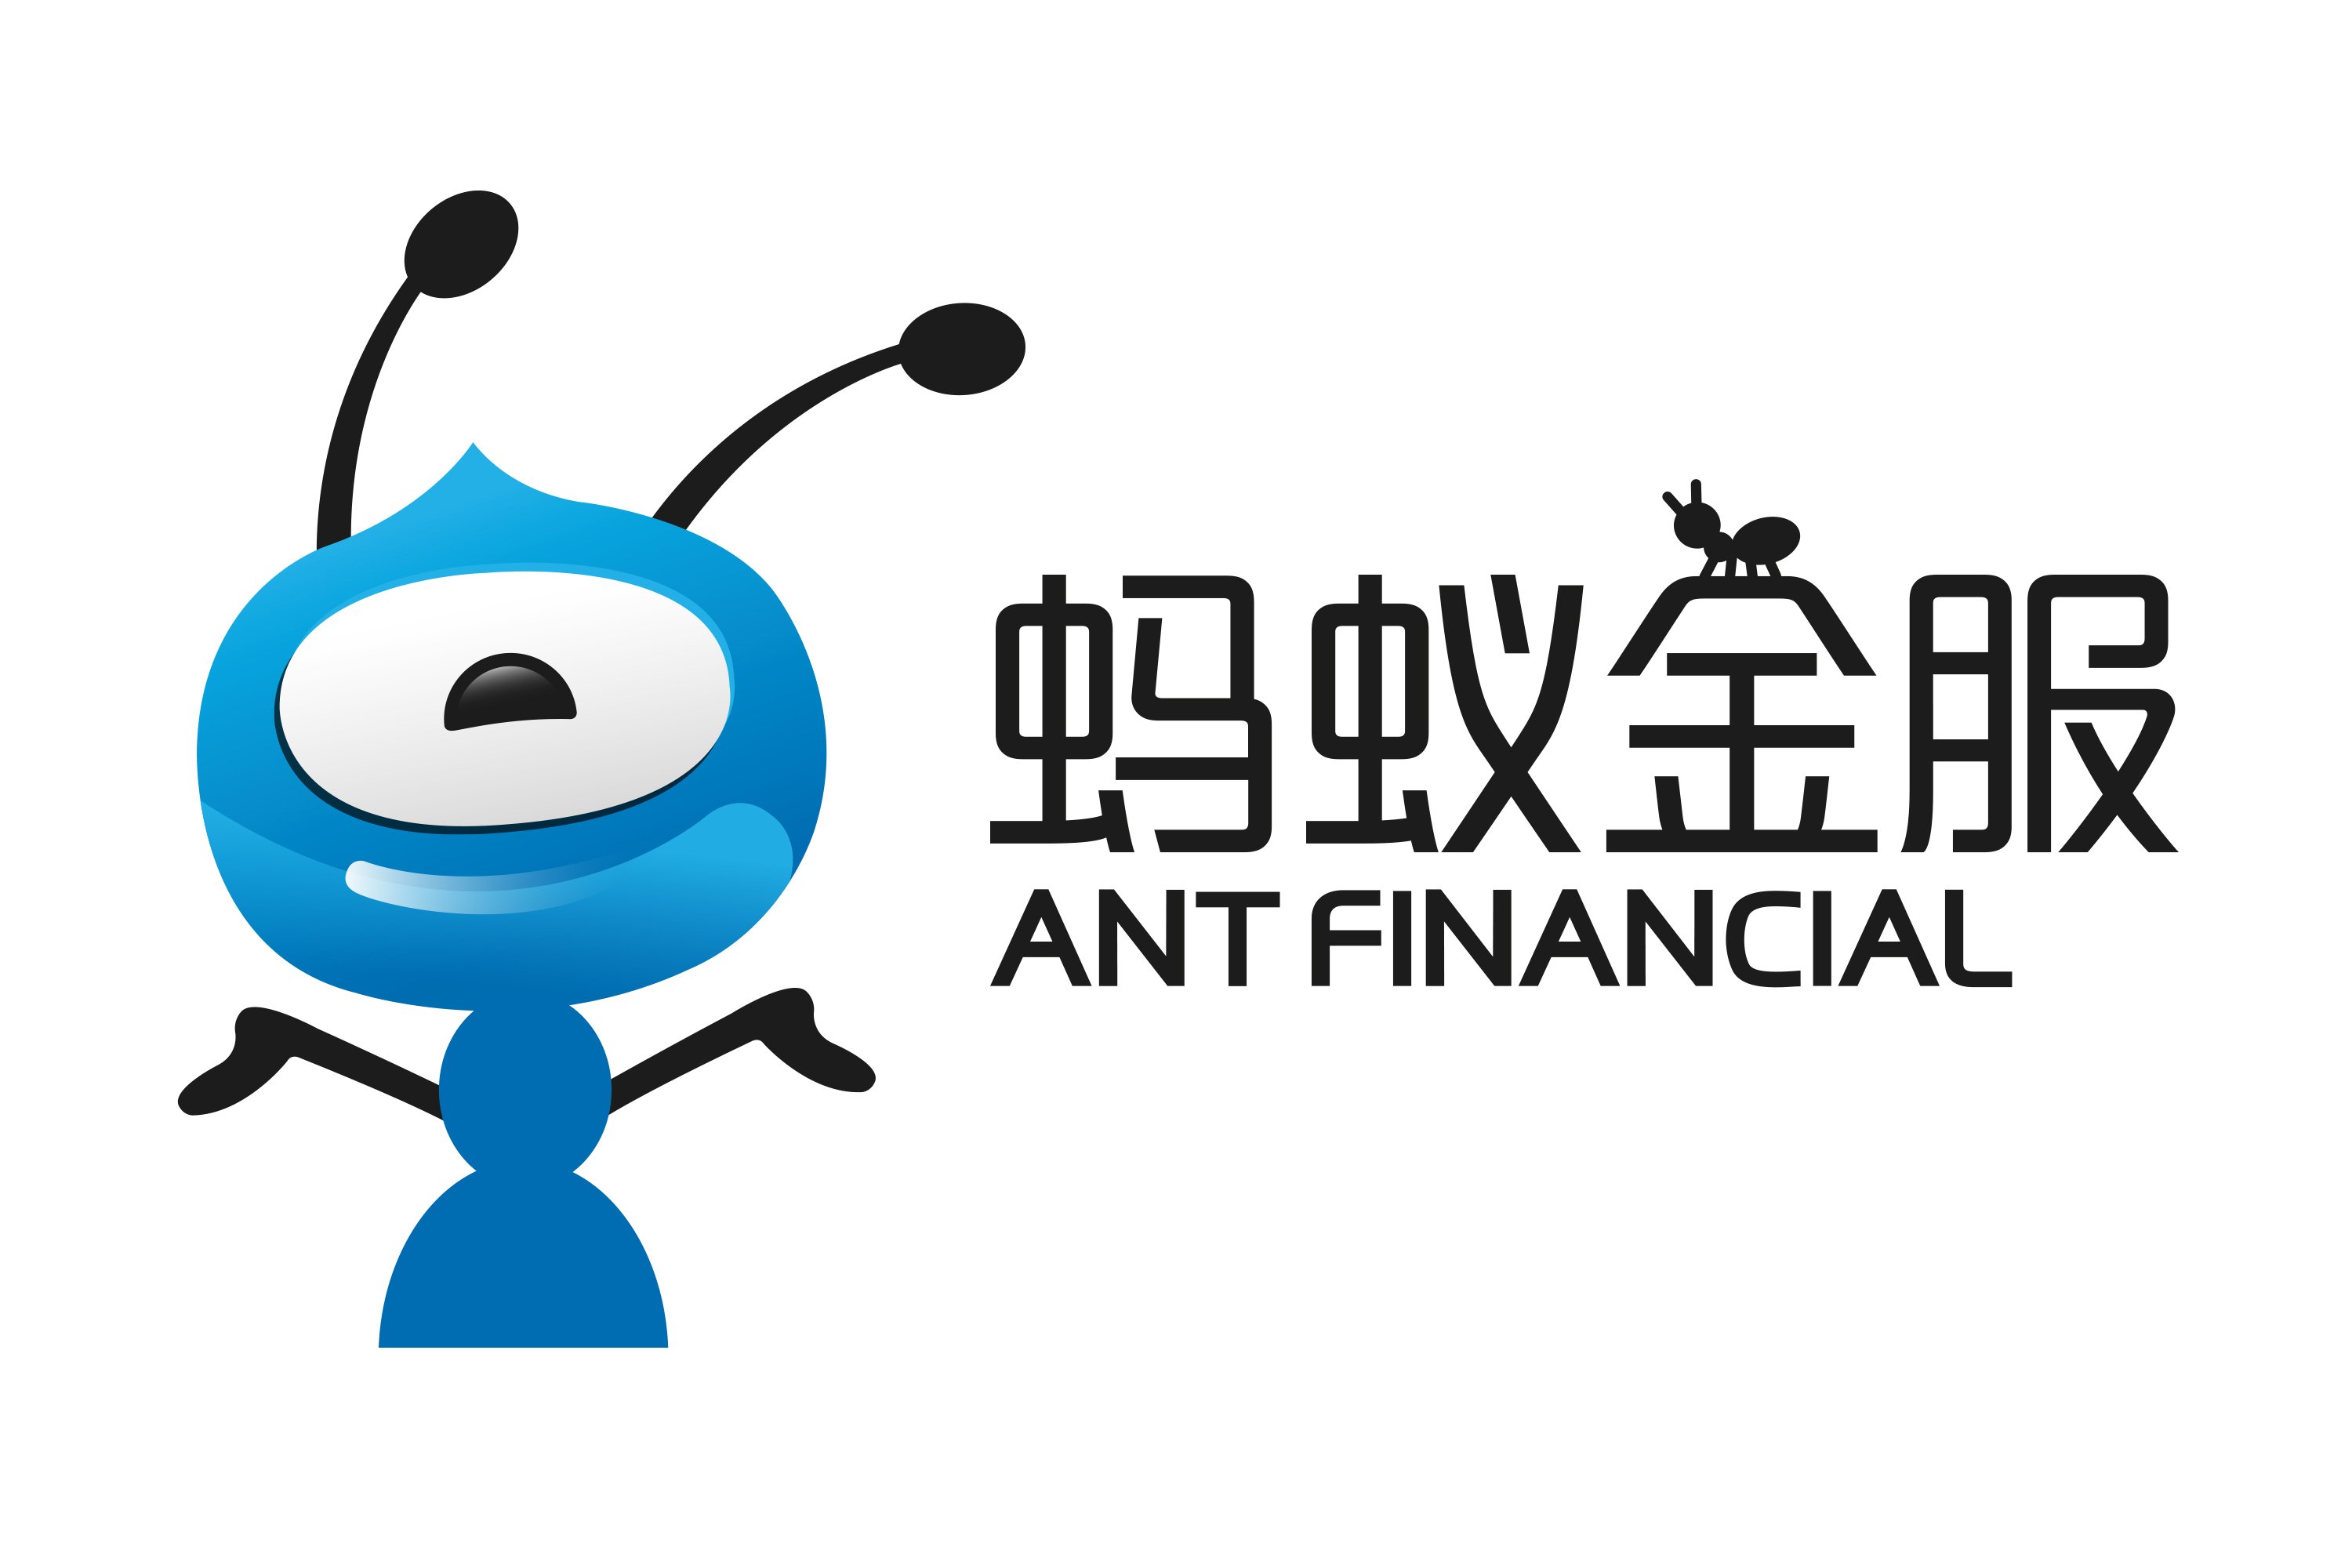 Ant Financial บริษัทแม่ของ Alipay